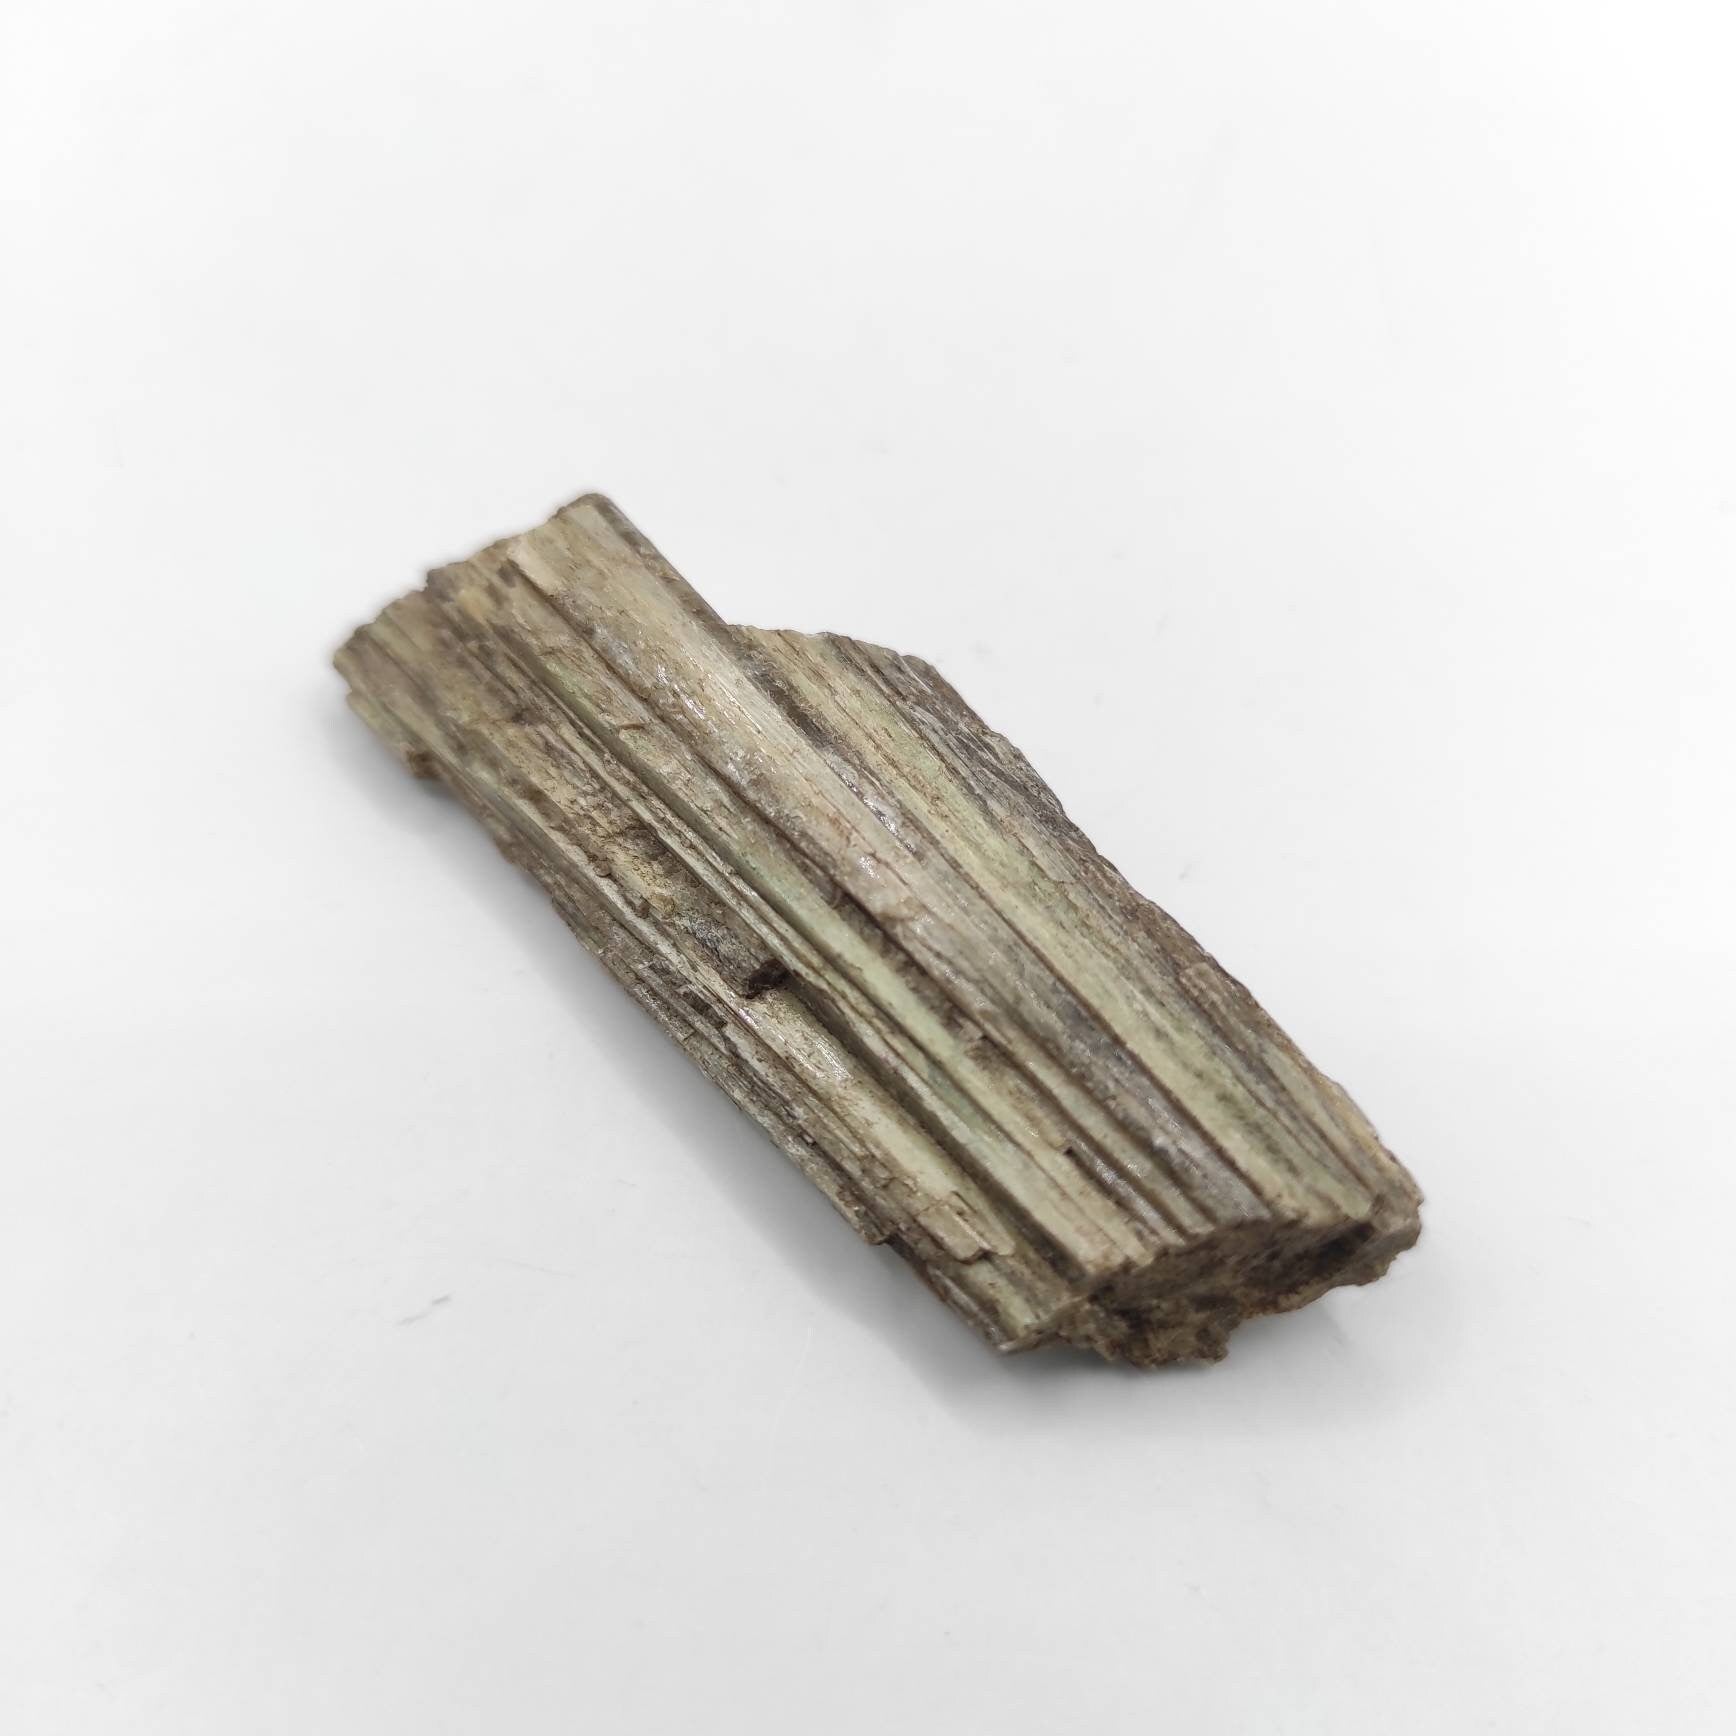 18g Diopside Mineral Specimen from Orford Nickel Mine - St-Denis-de-Brompton, Quebec, Canada - Natural Diopside Crystals - "Wood Crystal"